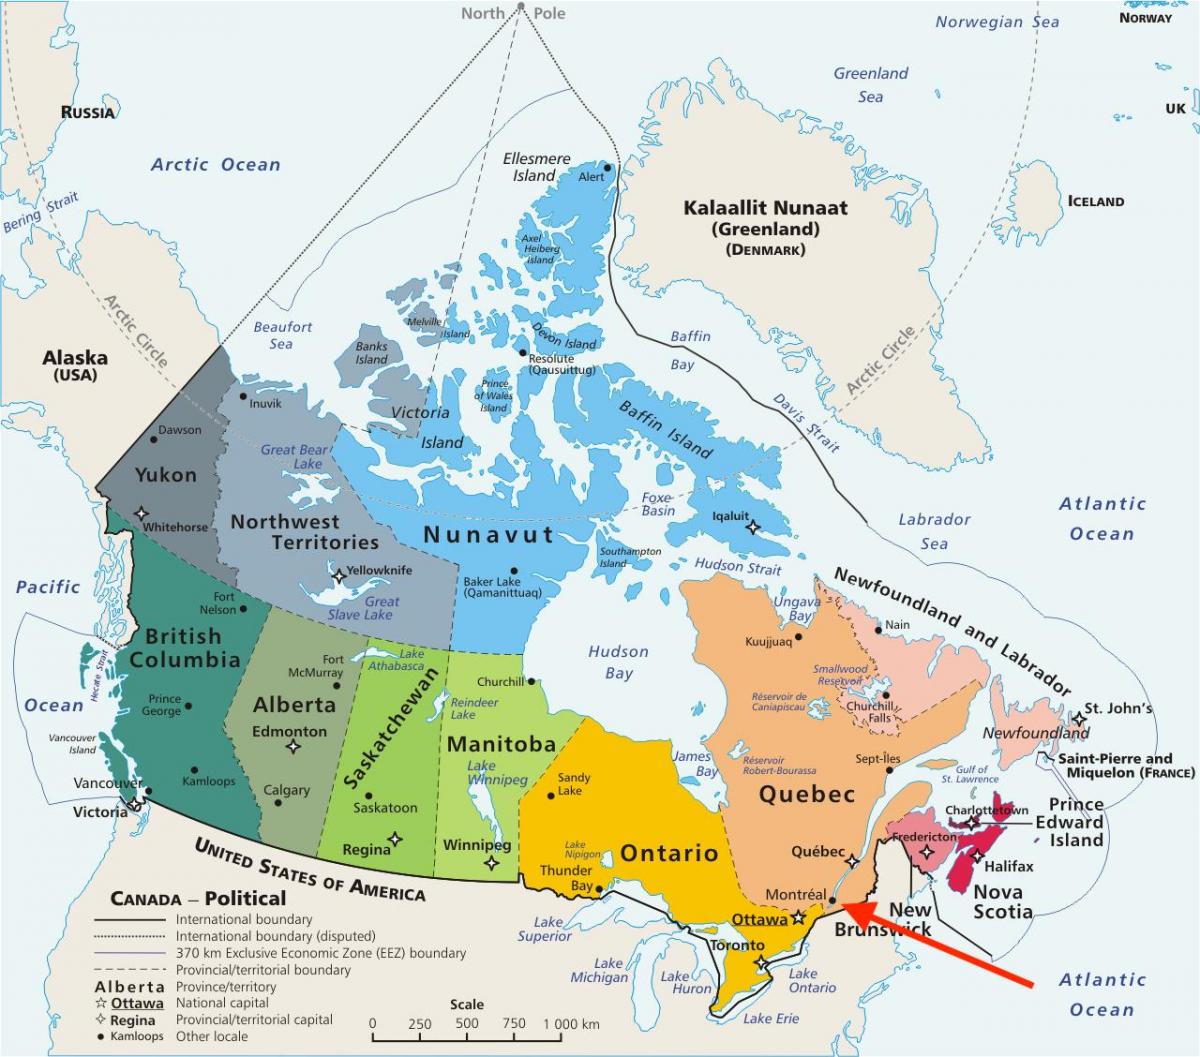 Монреаль в Квебеке - карта Канады